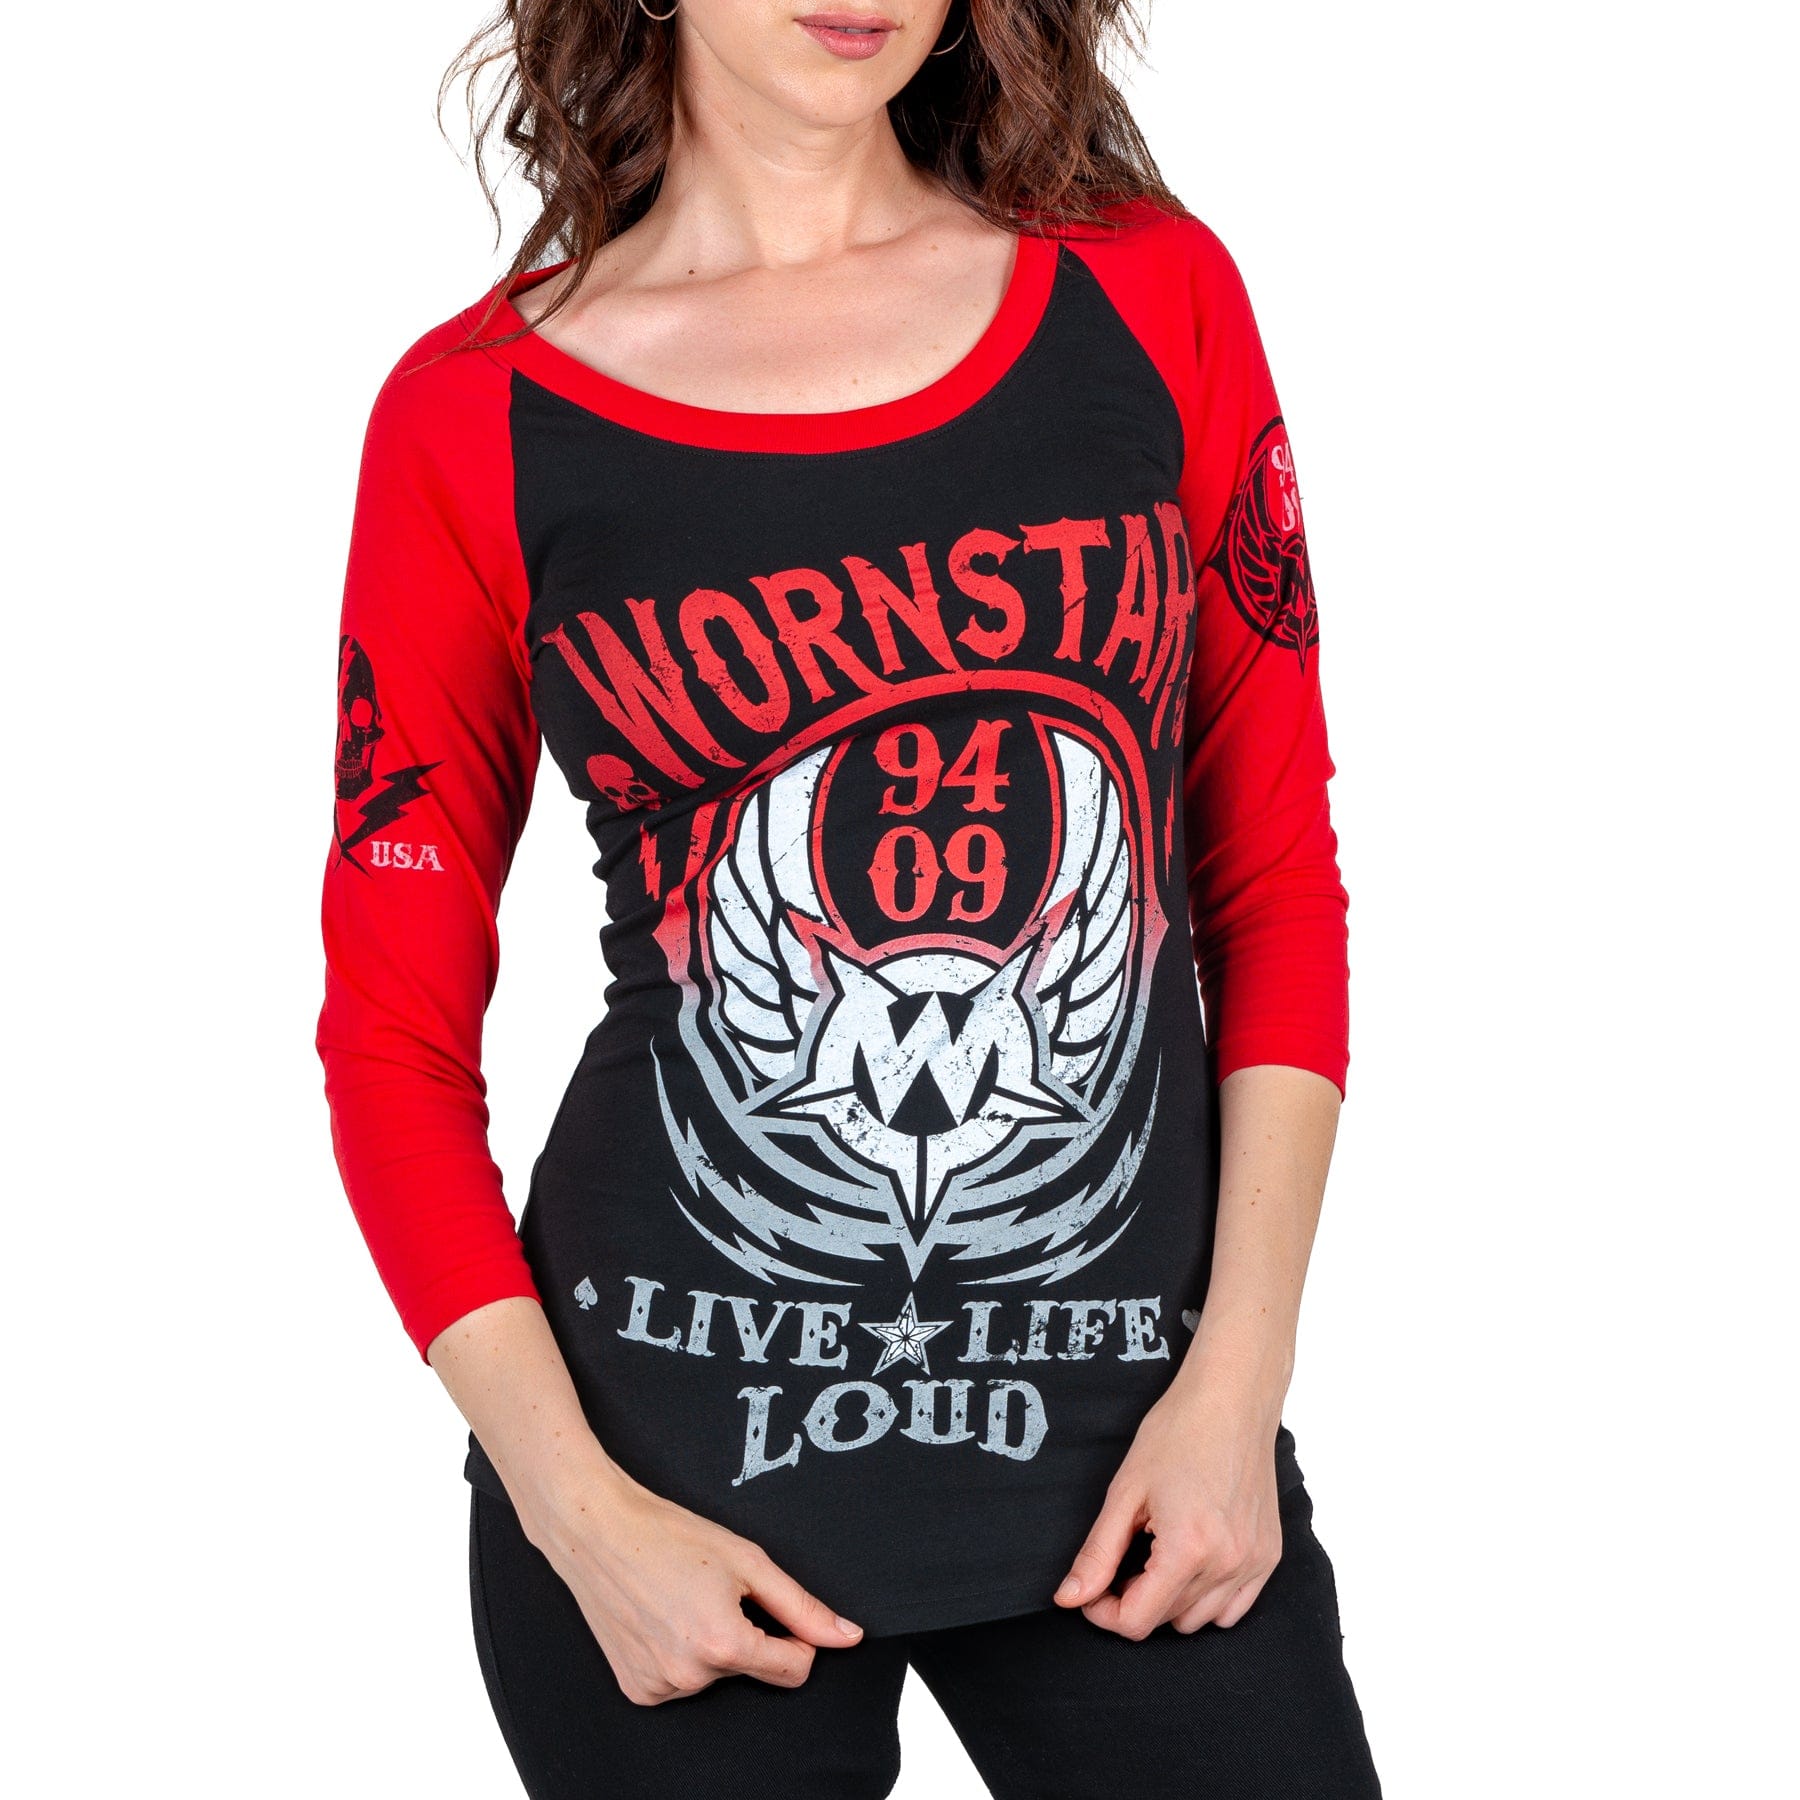 Wornstar Clothing Womens Tee. Live Life Loud Raglan T-Shirt - Red/Black